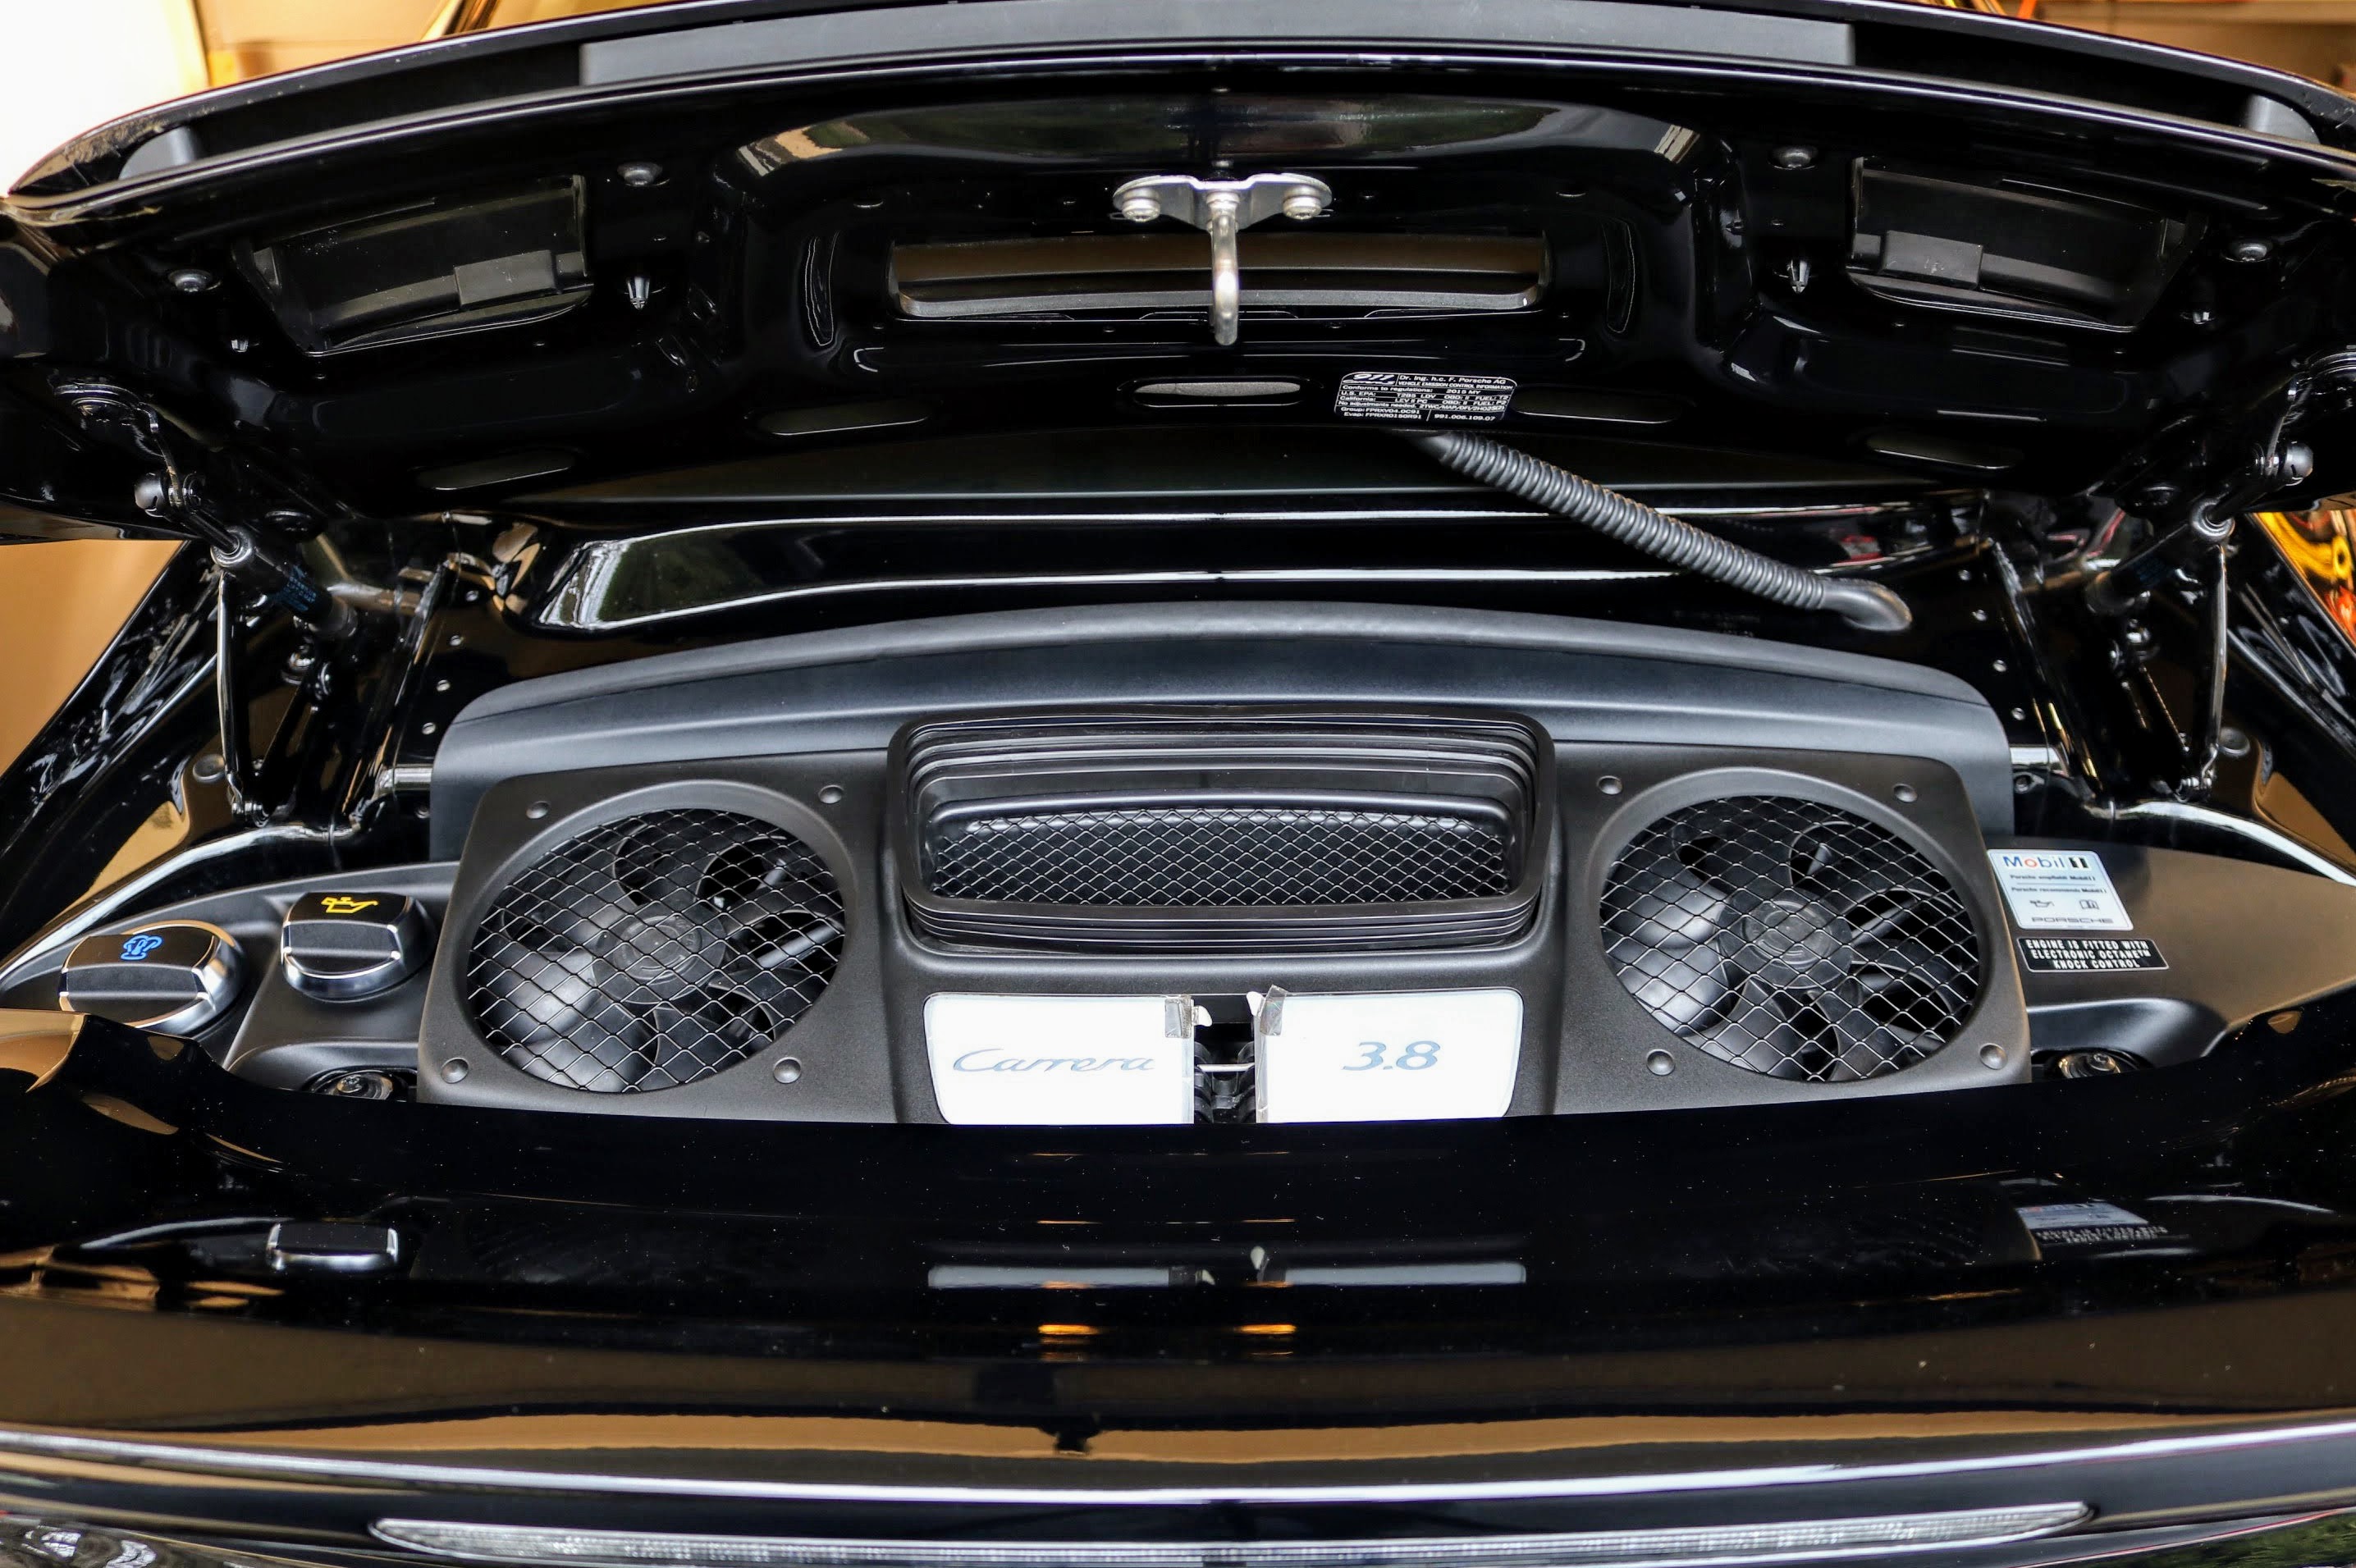 Porsche 911 (991.1) engine compartment